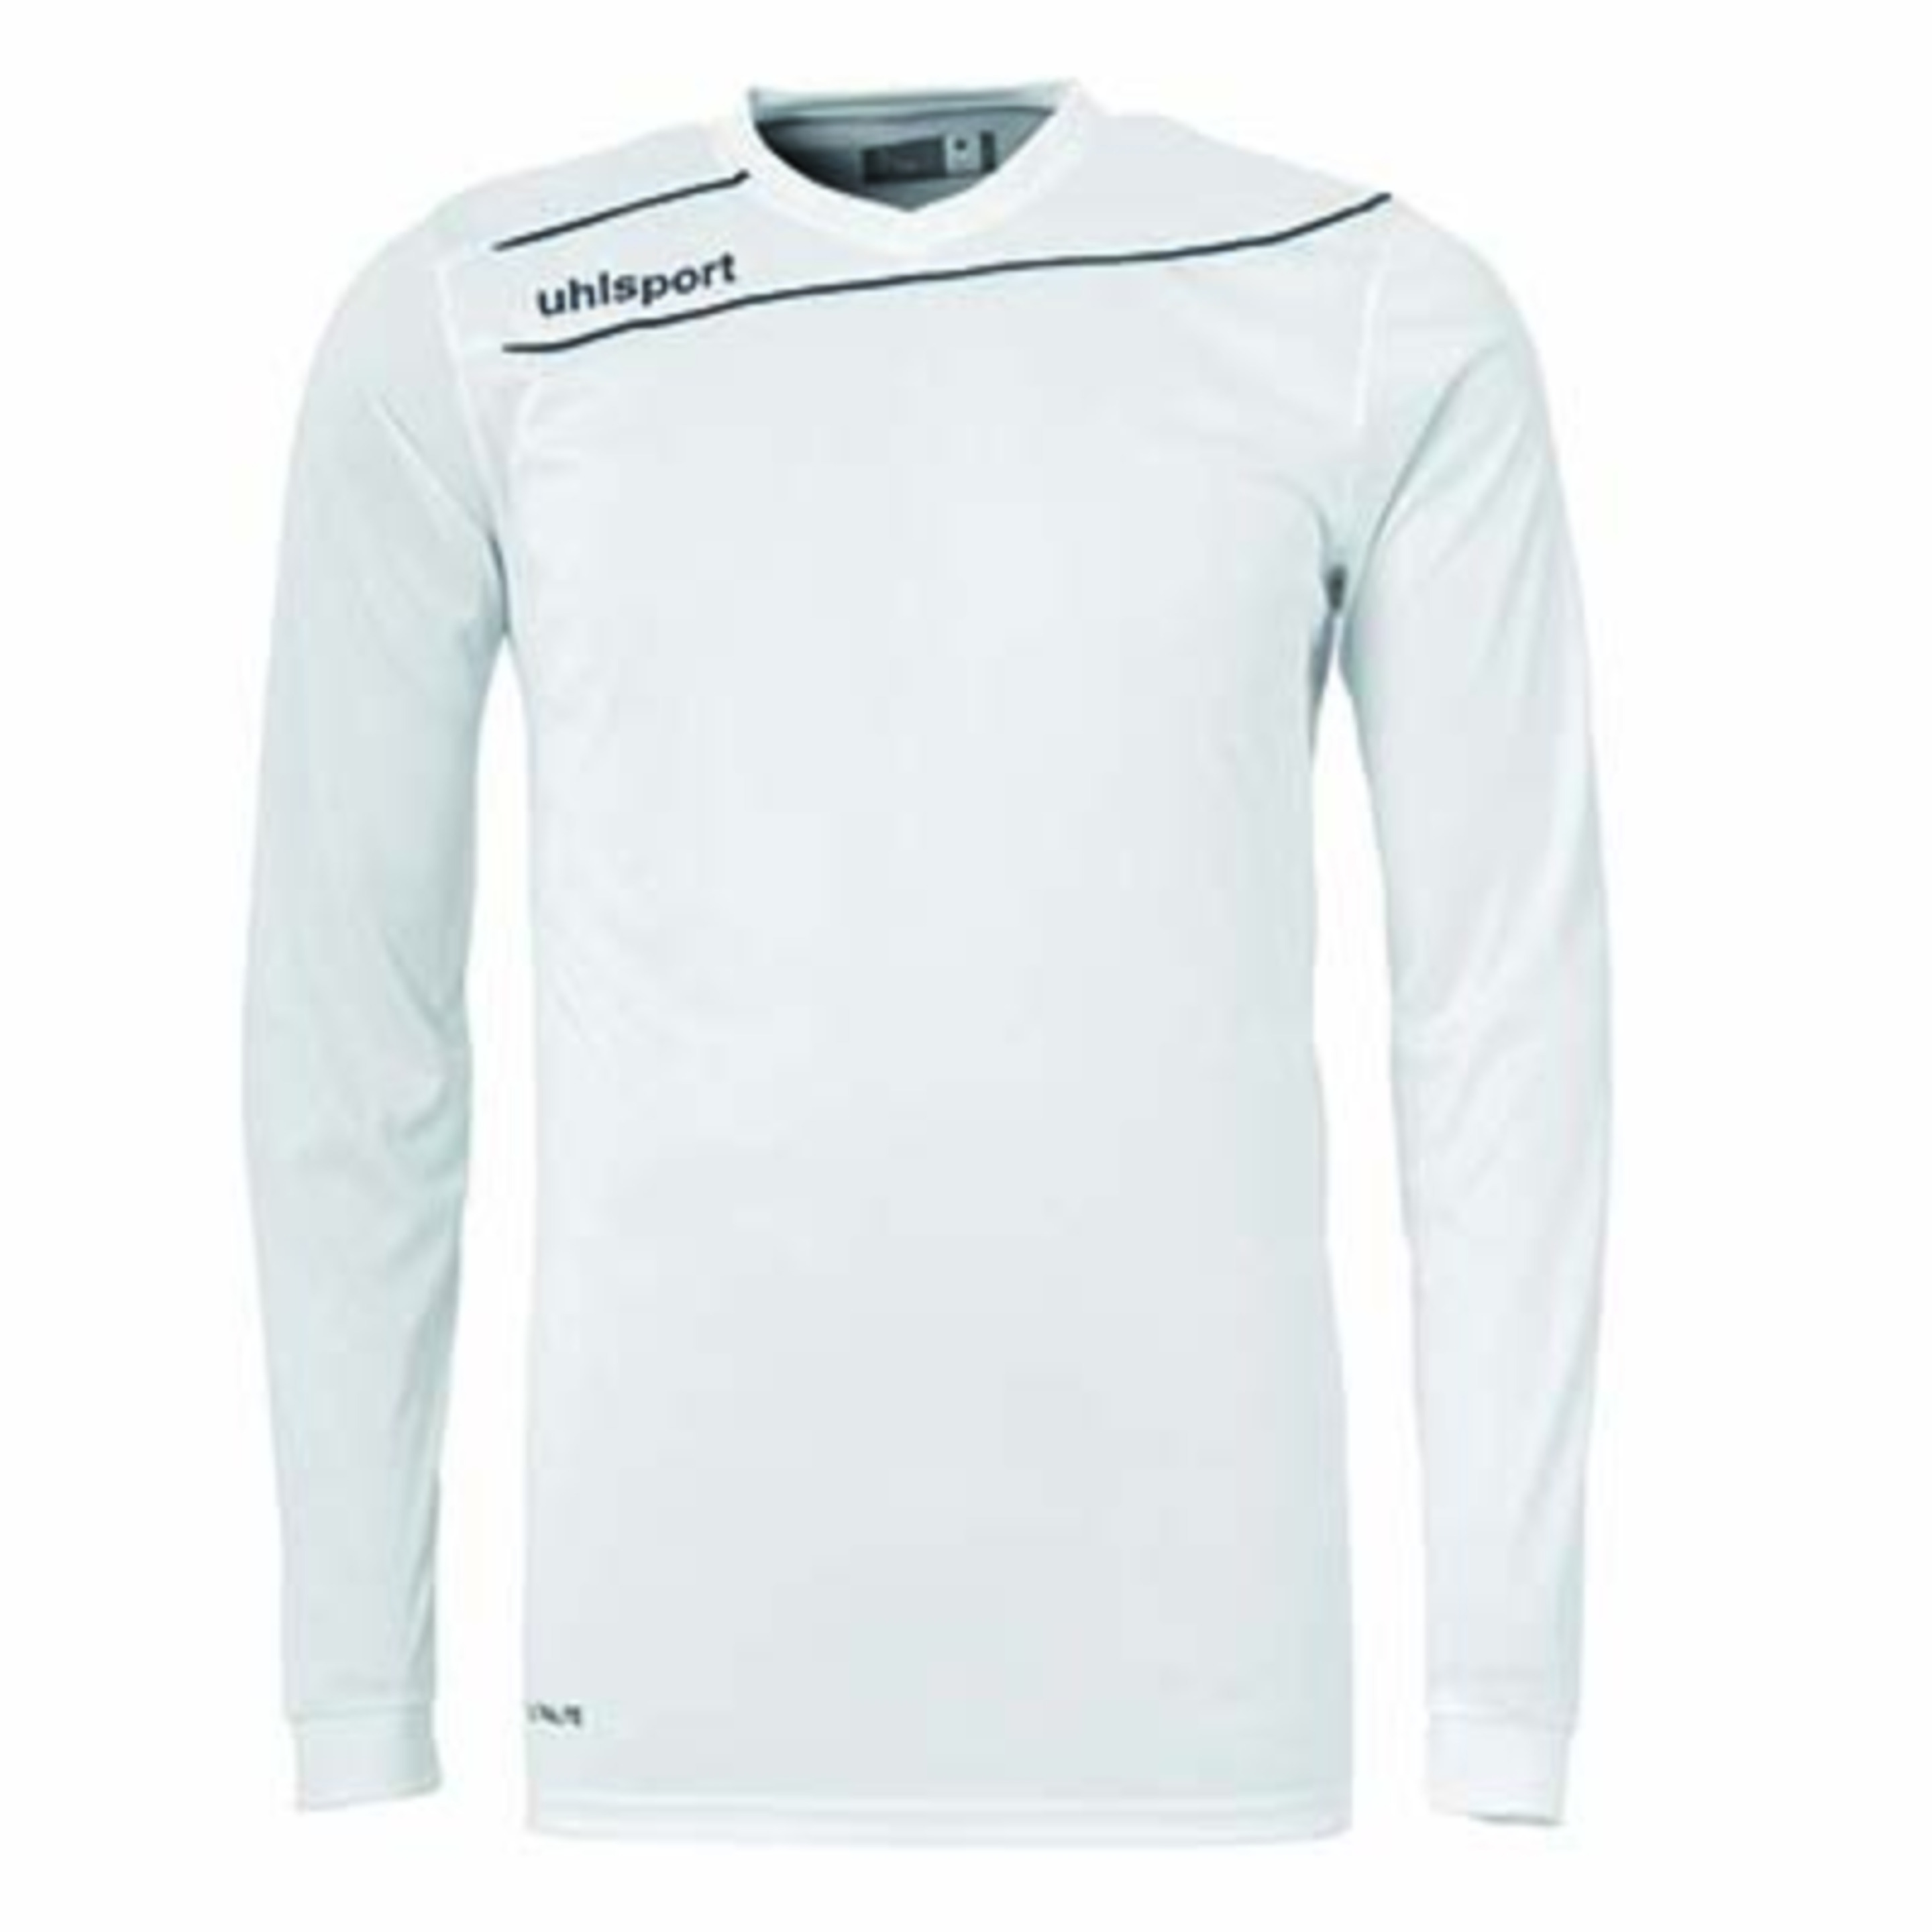 Stream 3.0 Camiseta Ml Blanco/negro Uhlsport - negro-blanco - 